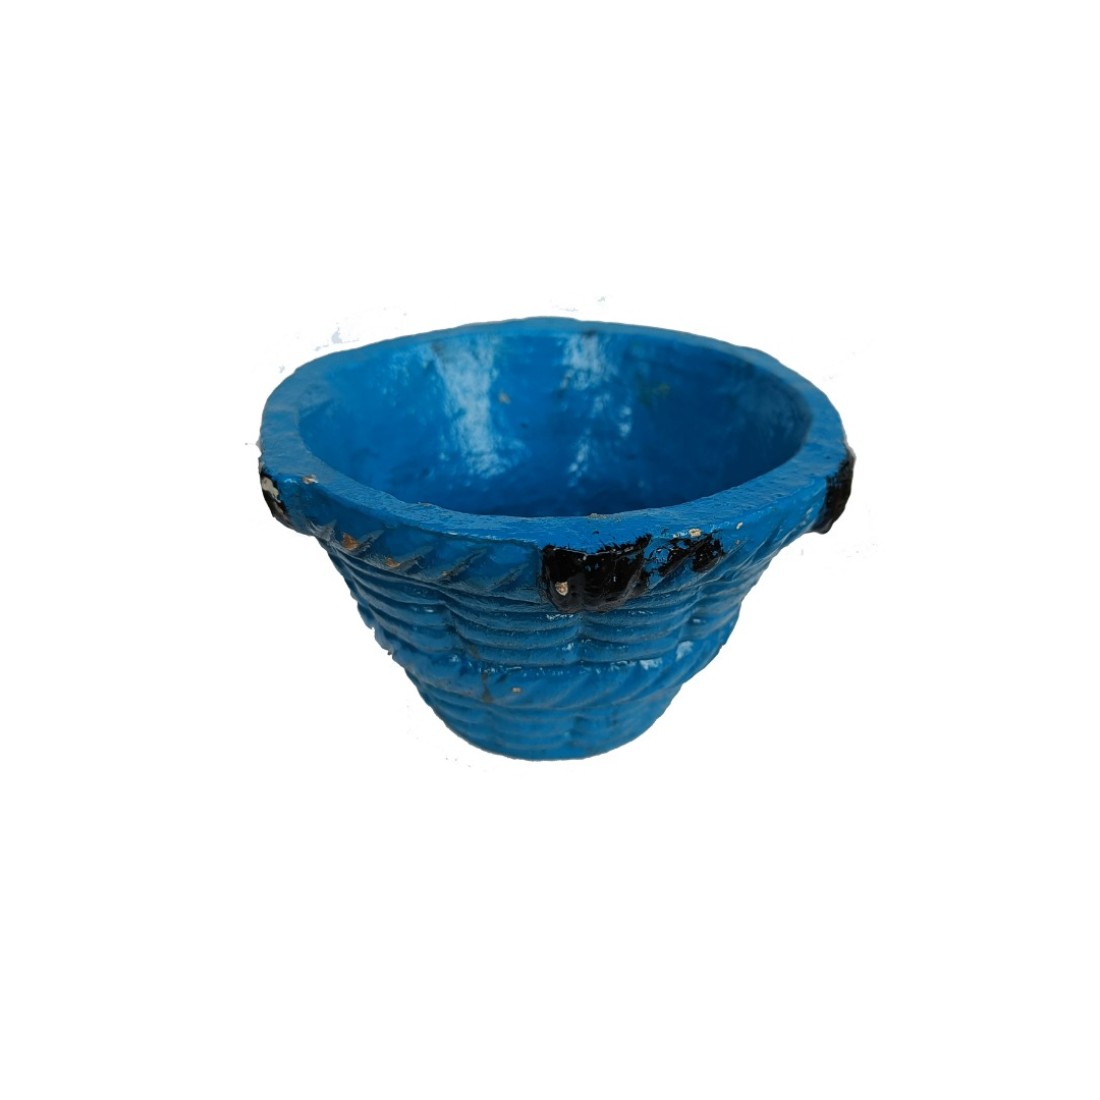 Tillage-Gowramma Set for Pooja and House Warming (Terracotta) | Traditional Mortar Pestle,Batan,winnow & Basket Miniature Toy Set 2